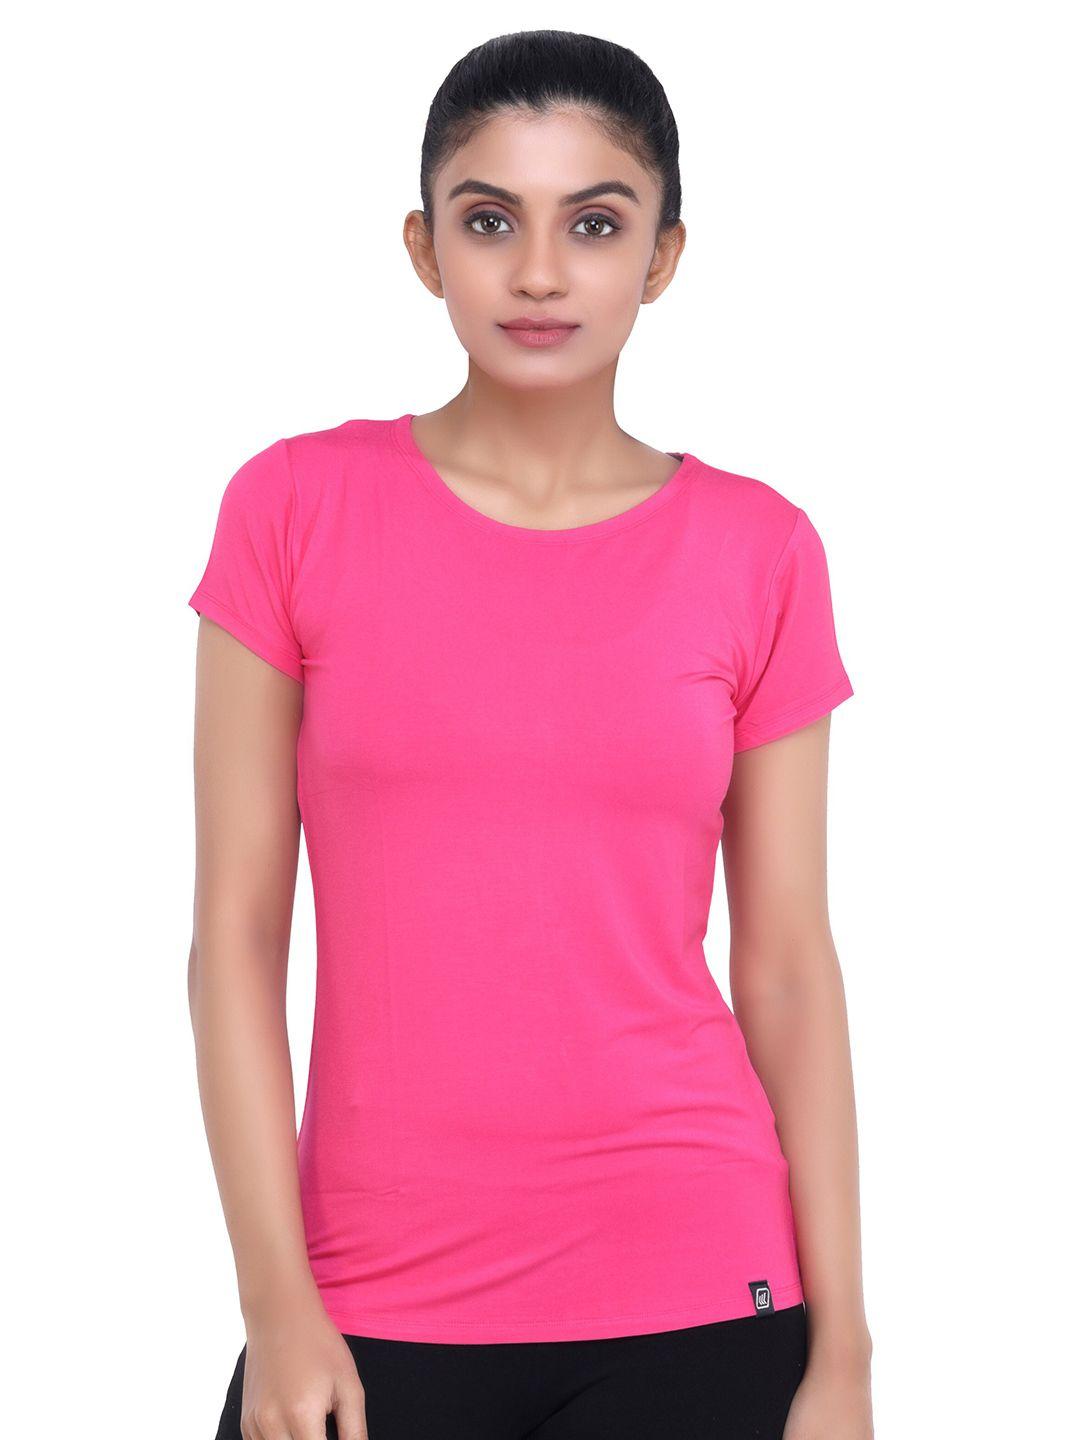 laasa sports women pink training or gym t-shirt